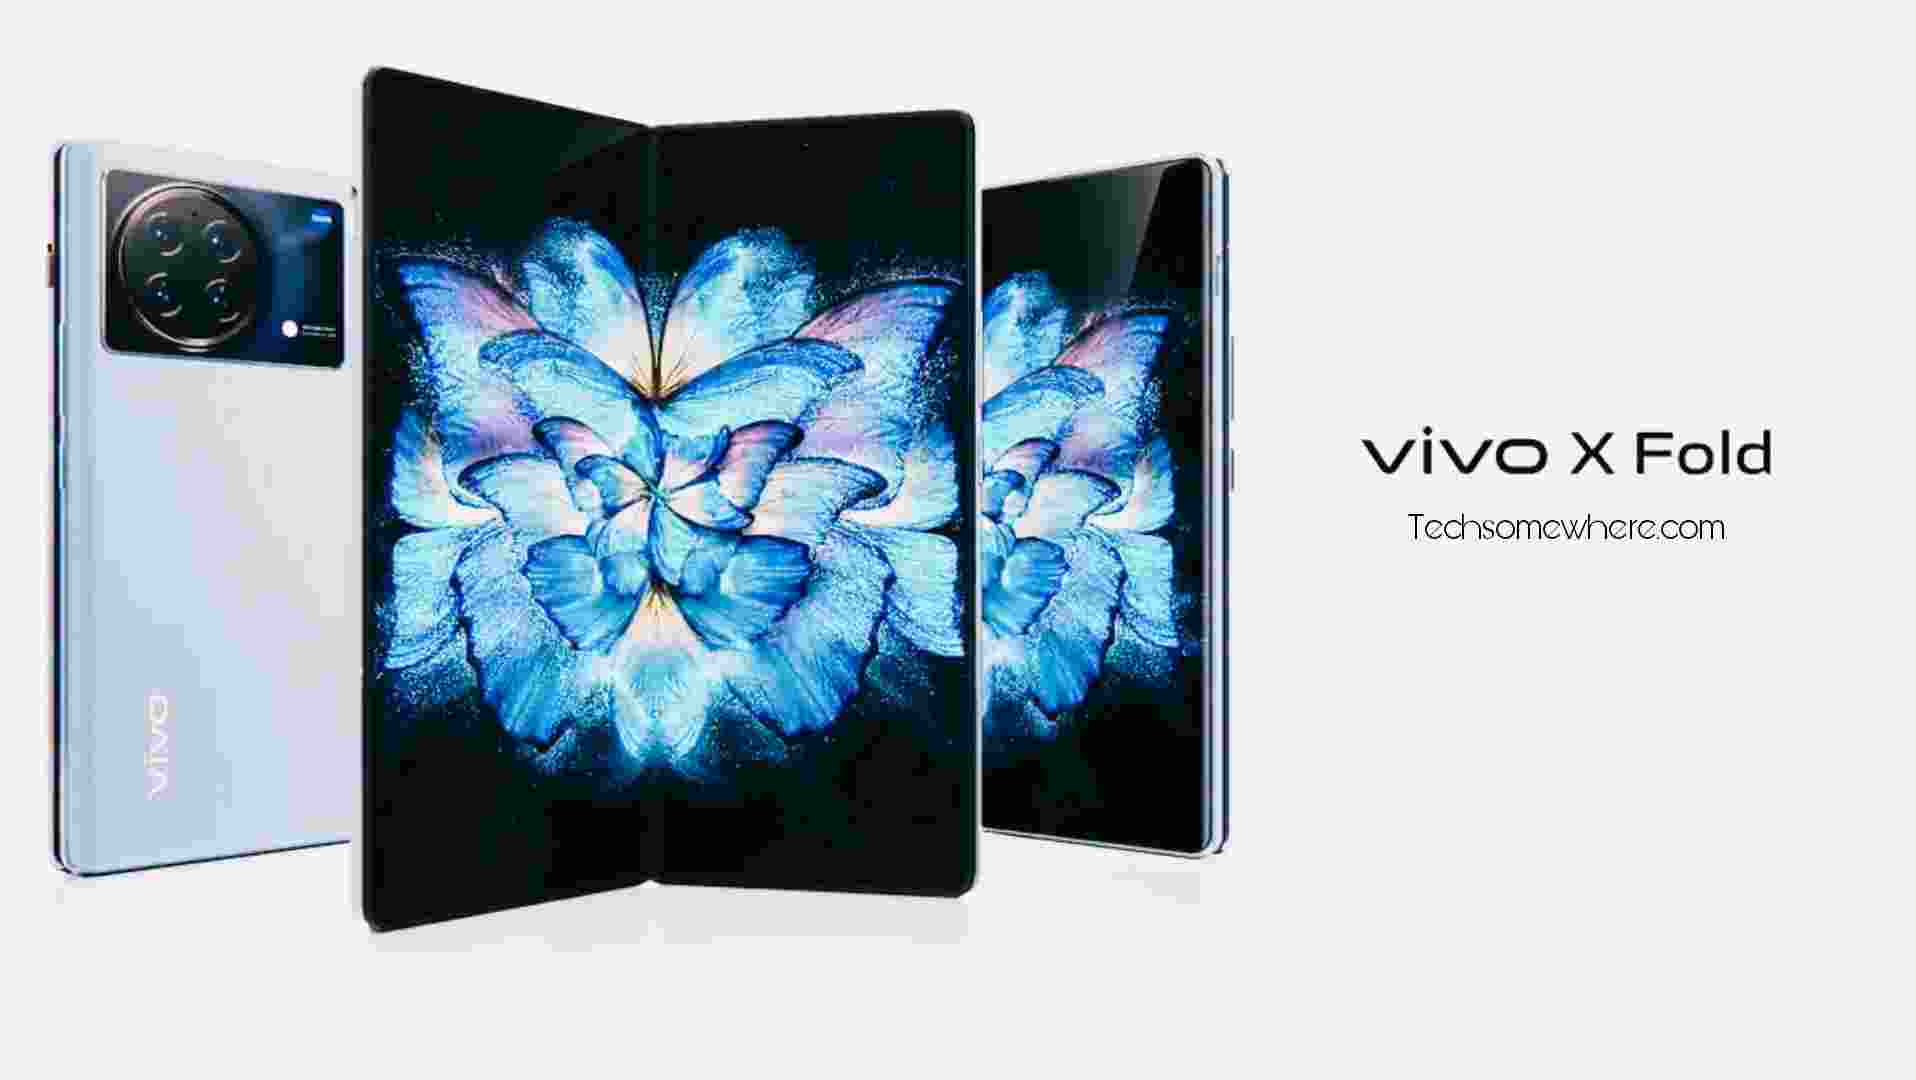 The Vivo X Fold Extraordinary Design, Features & price!